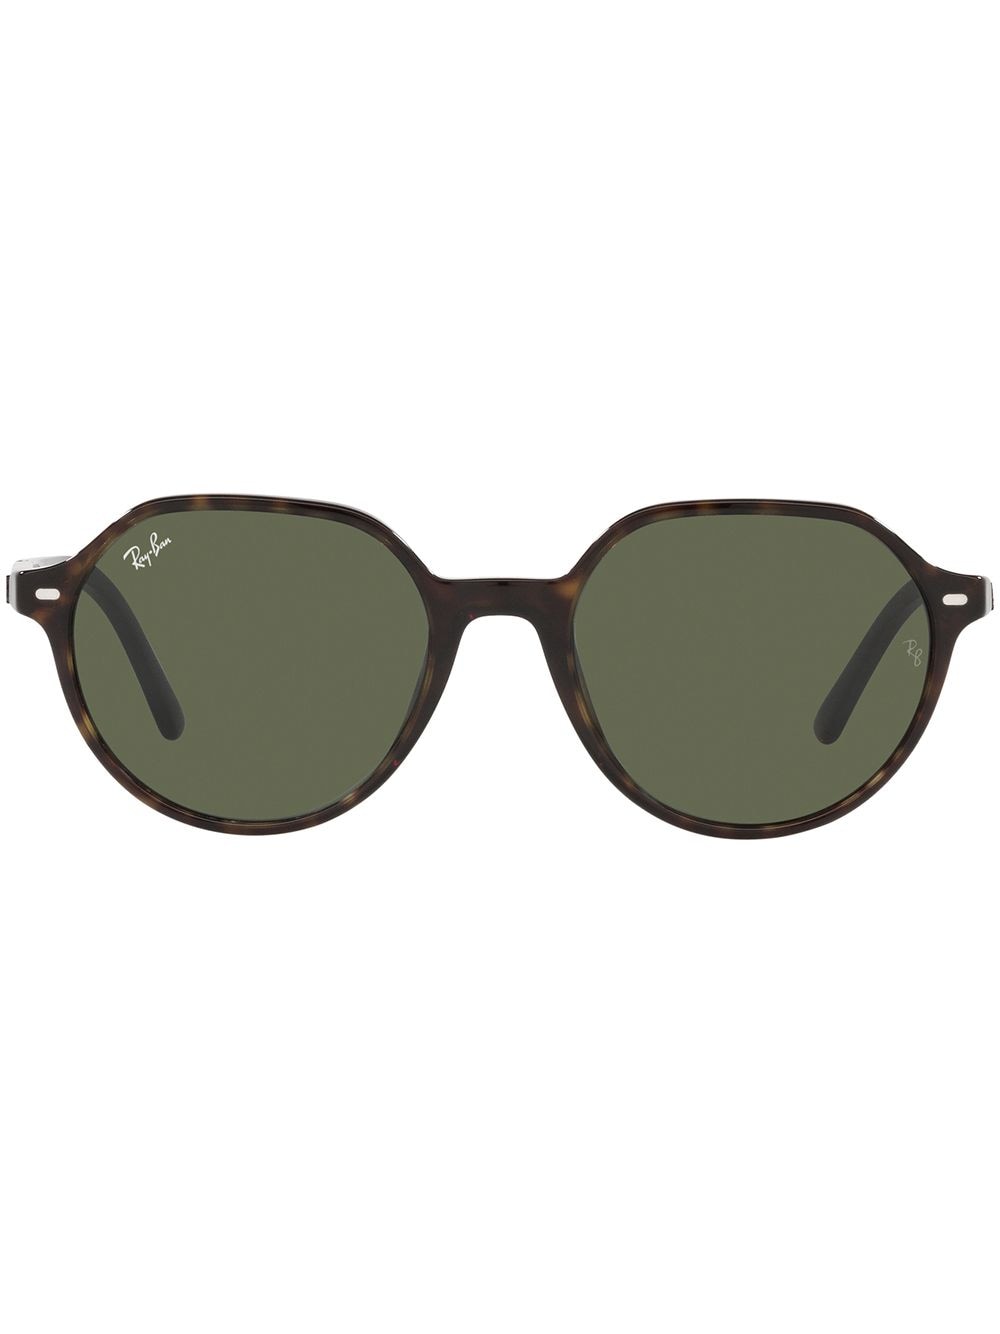 Ray-Ban Thalia round-frame sunglasses - Green von Ray-Ban